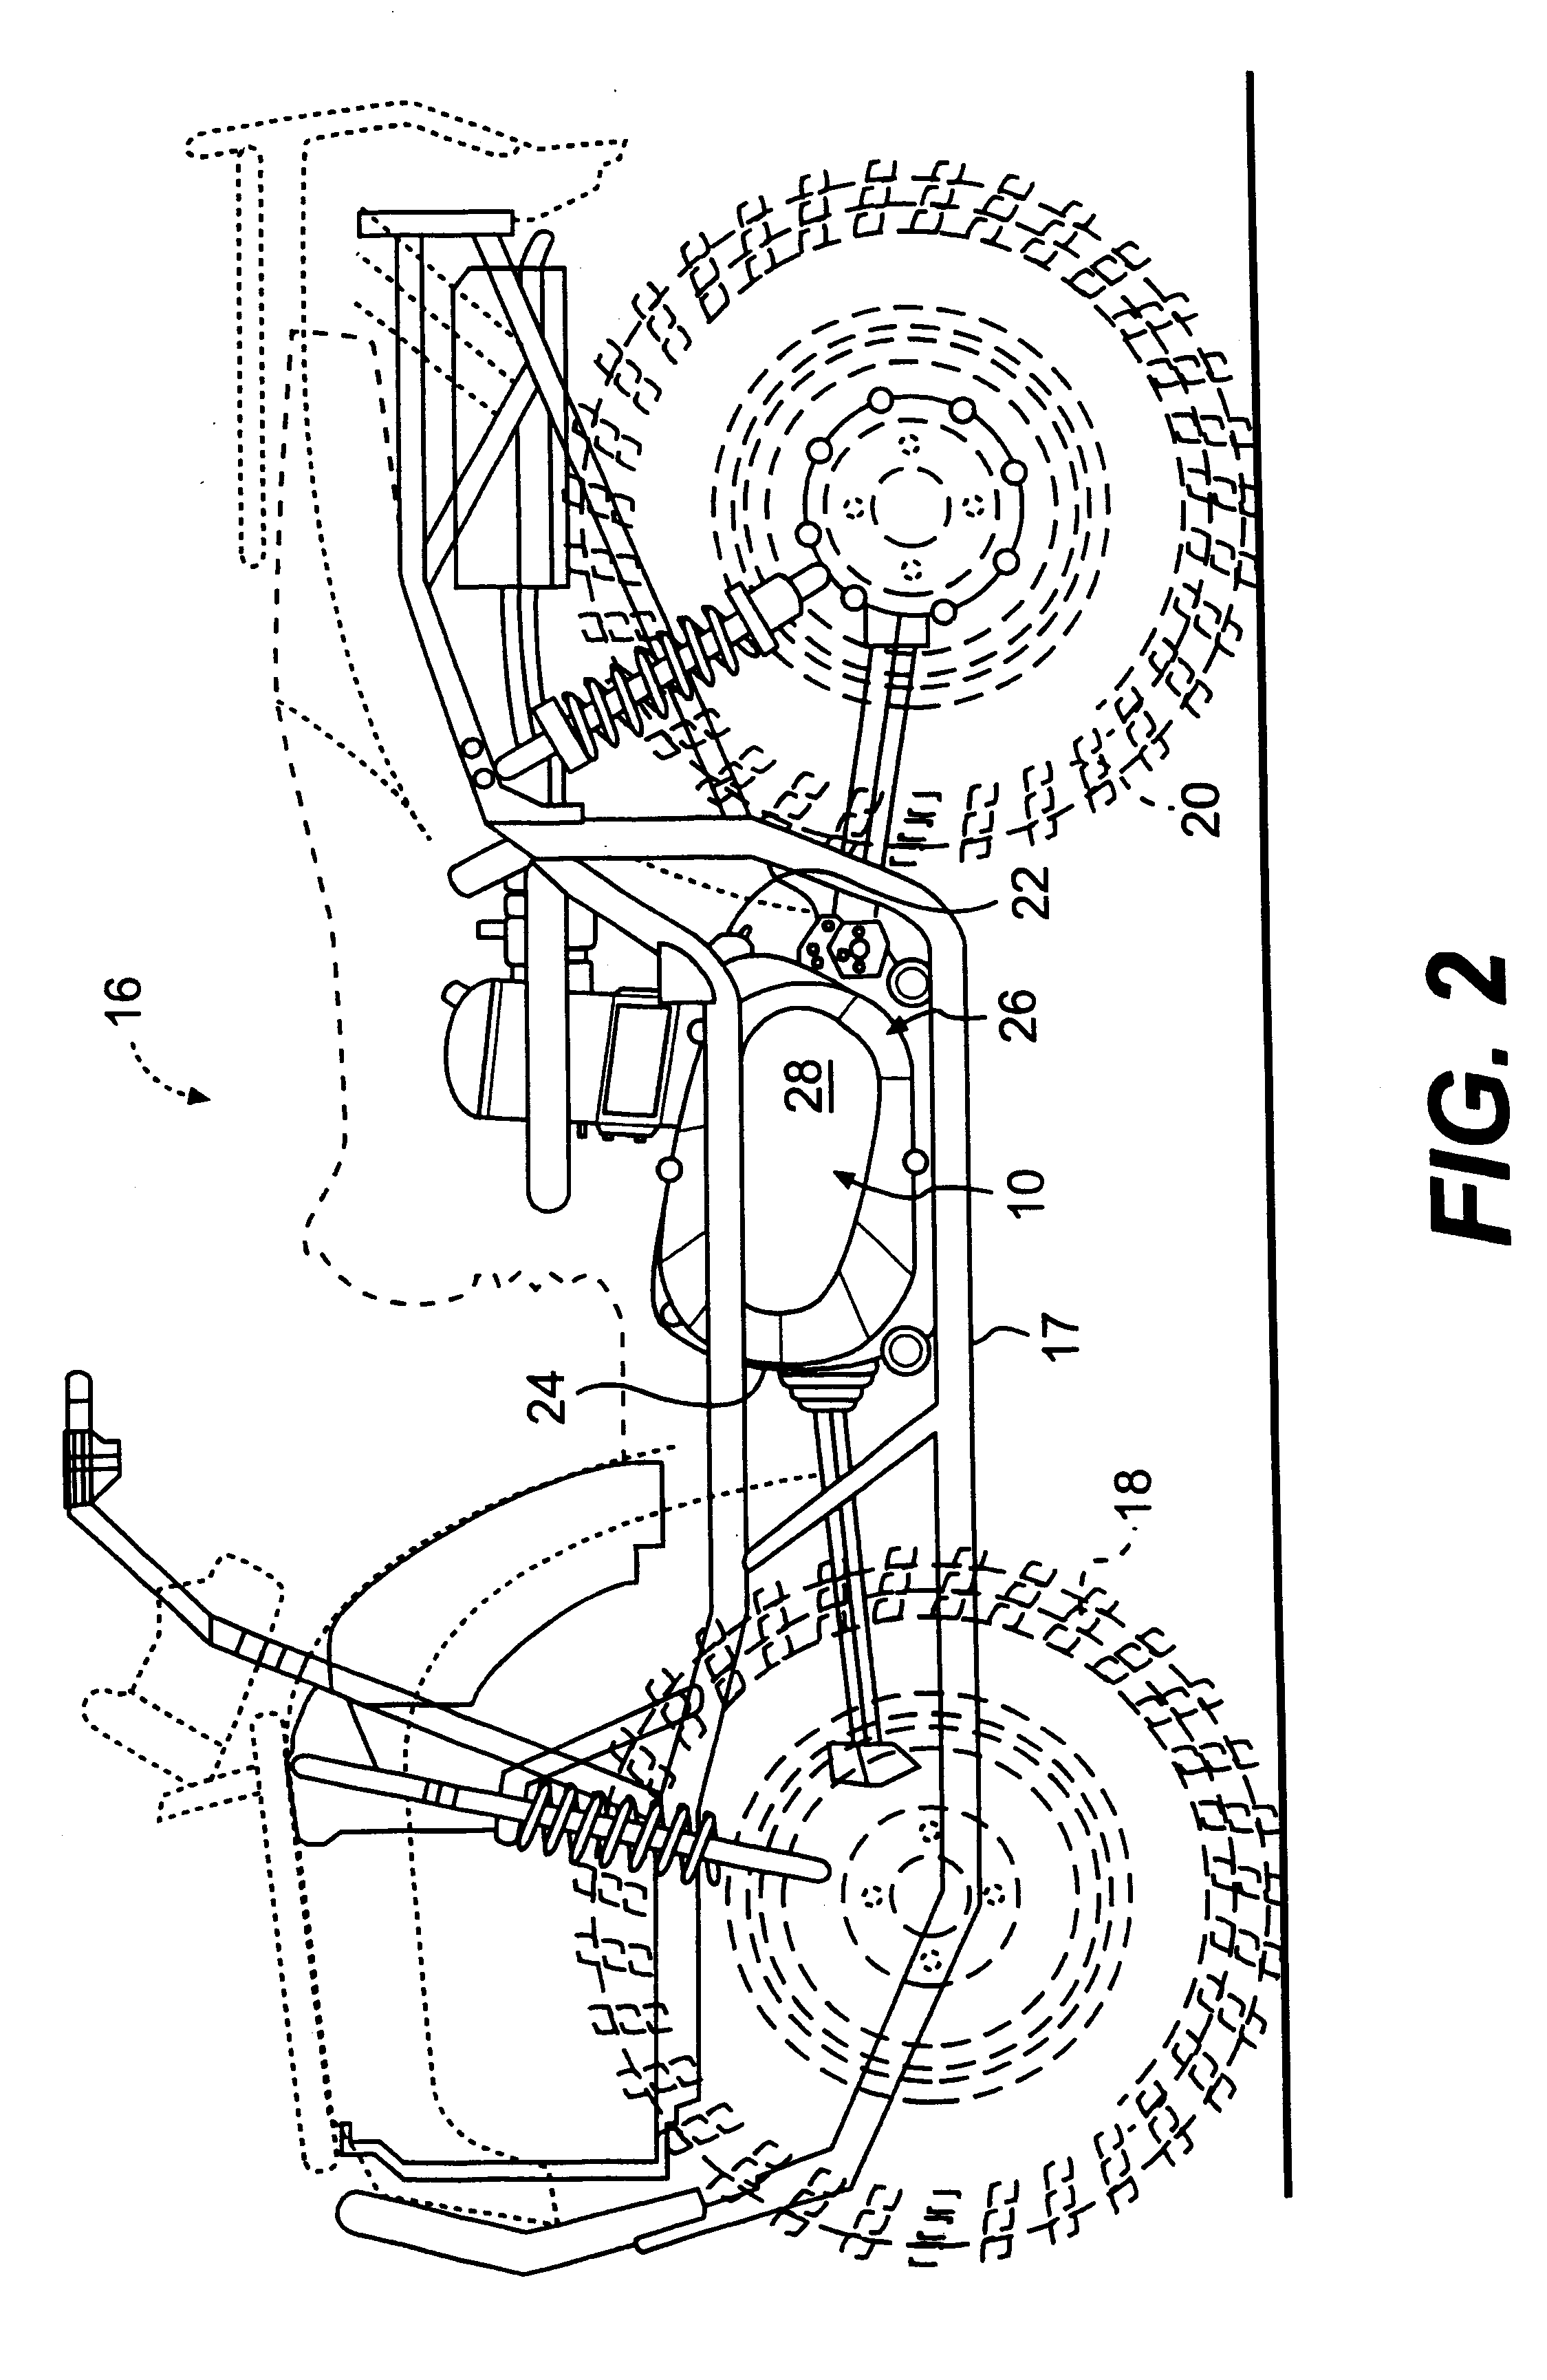 Component arrangement for an all terrain vehicle